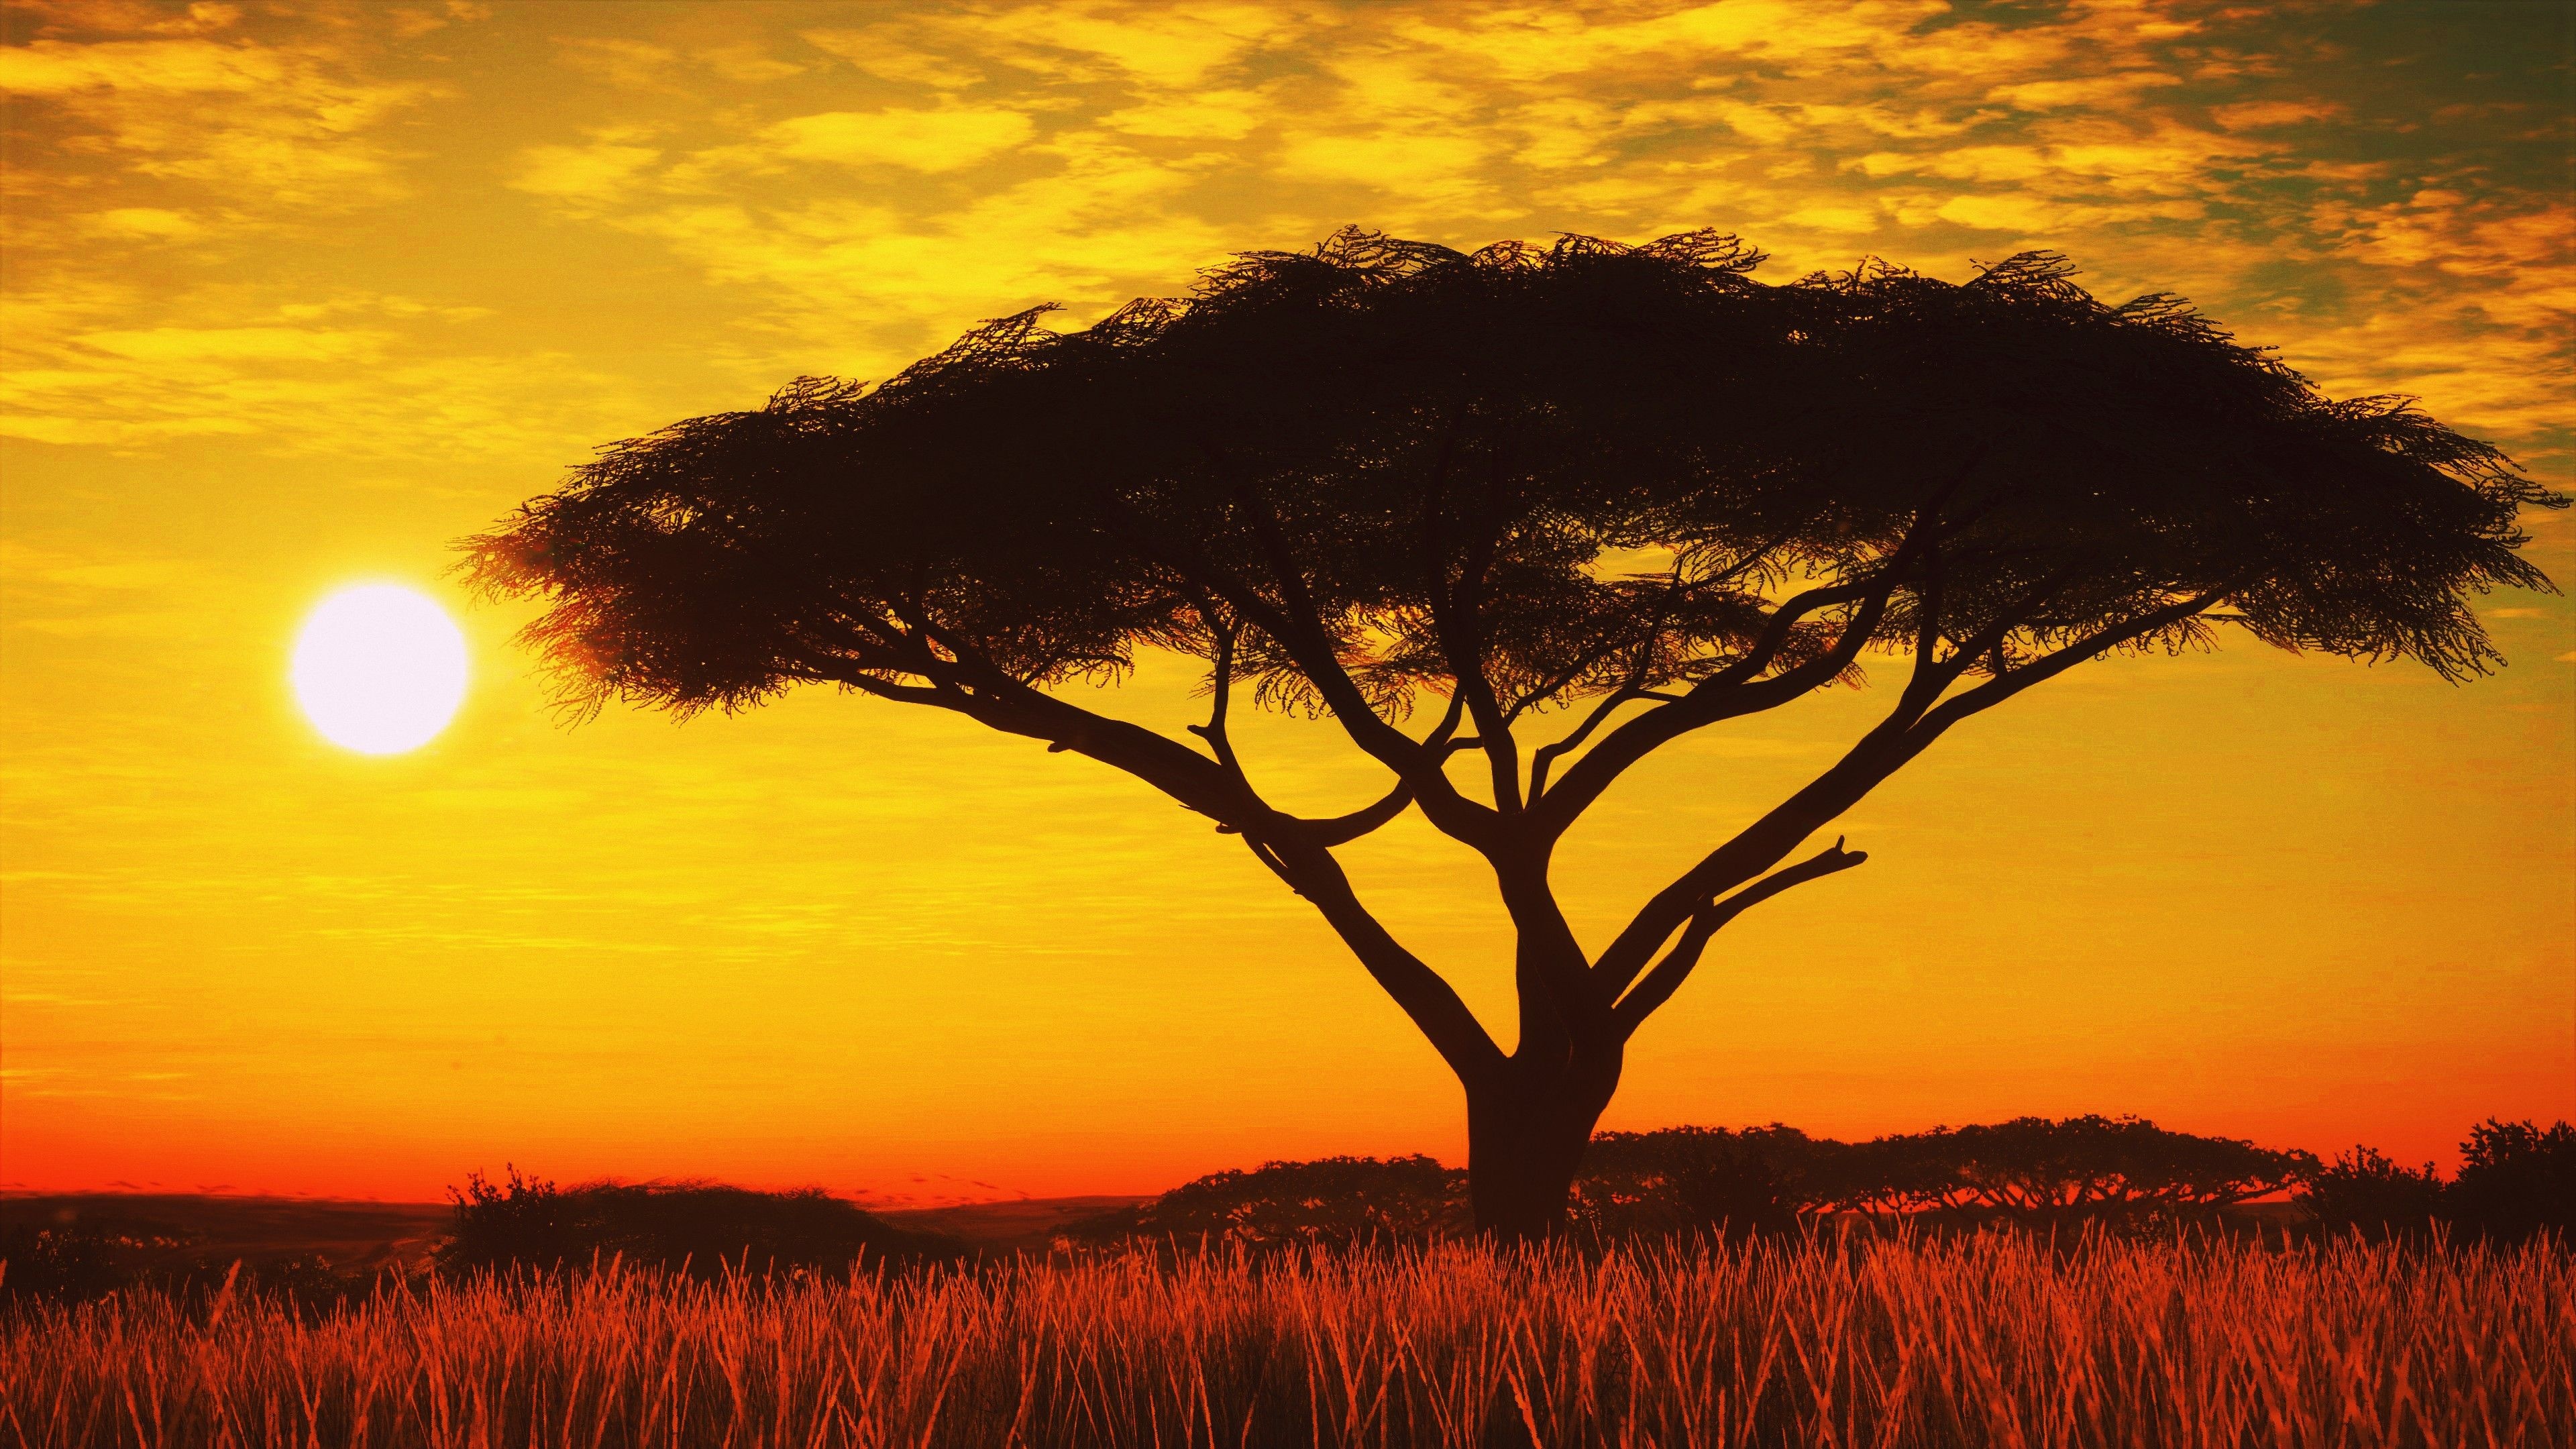 Serengeti, Stunning wallpapers, African wilderness, Untouched beauty, 3840x2160 4K Desktop